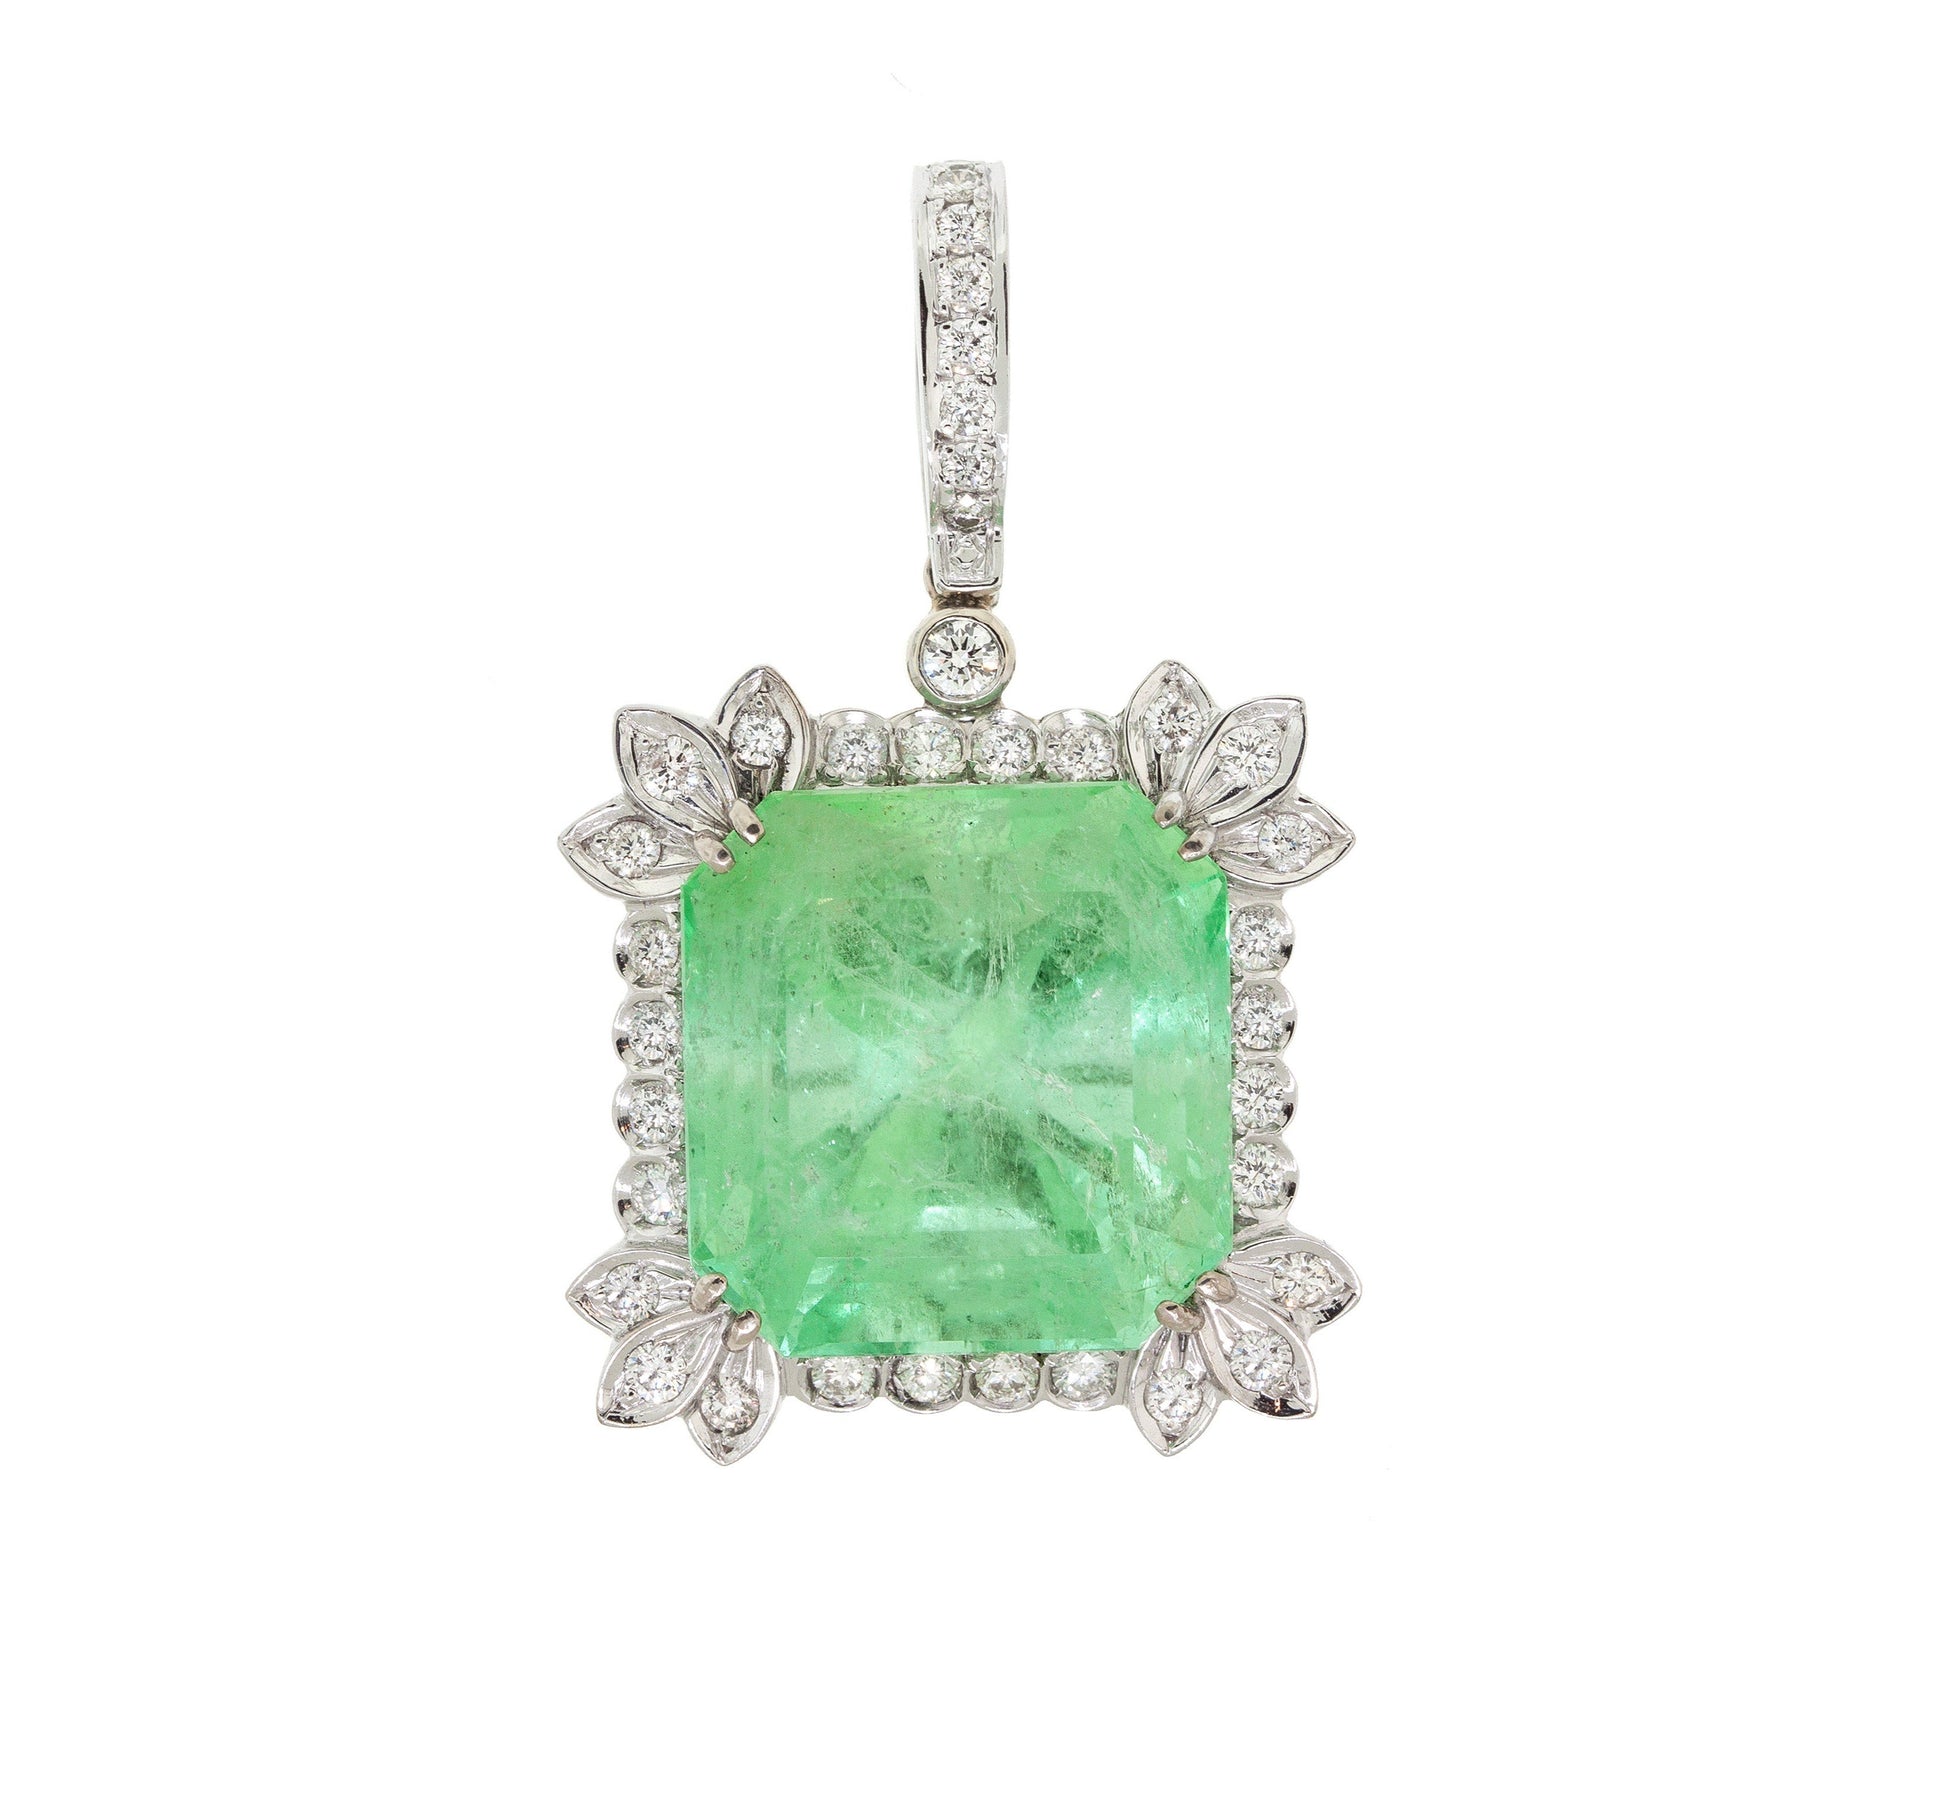   Emerald Necklace